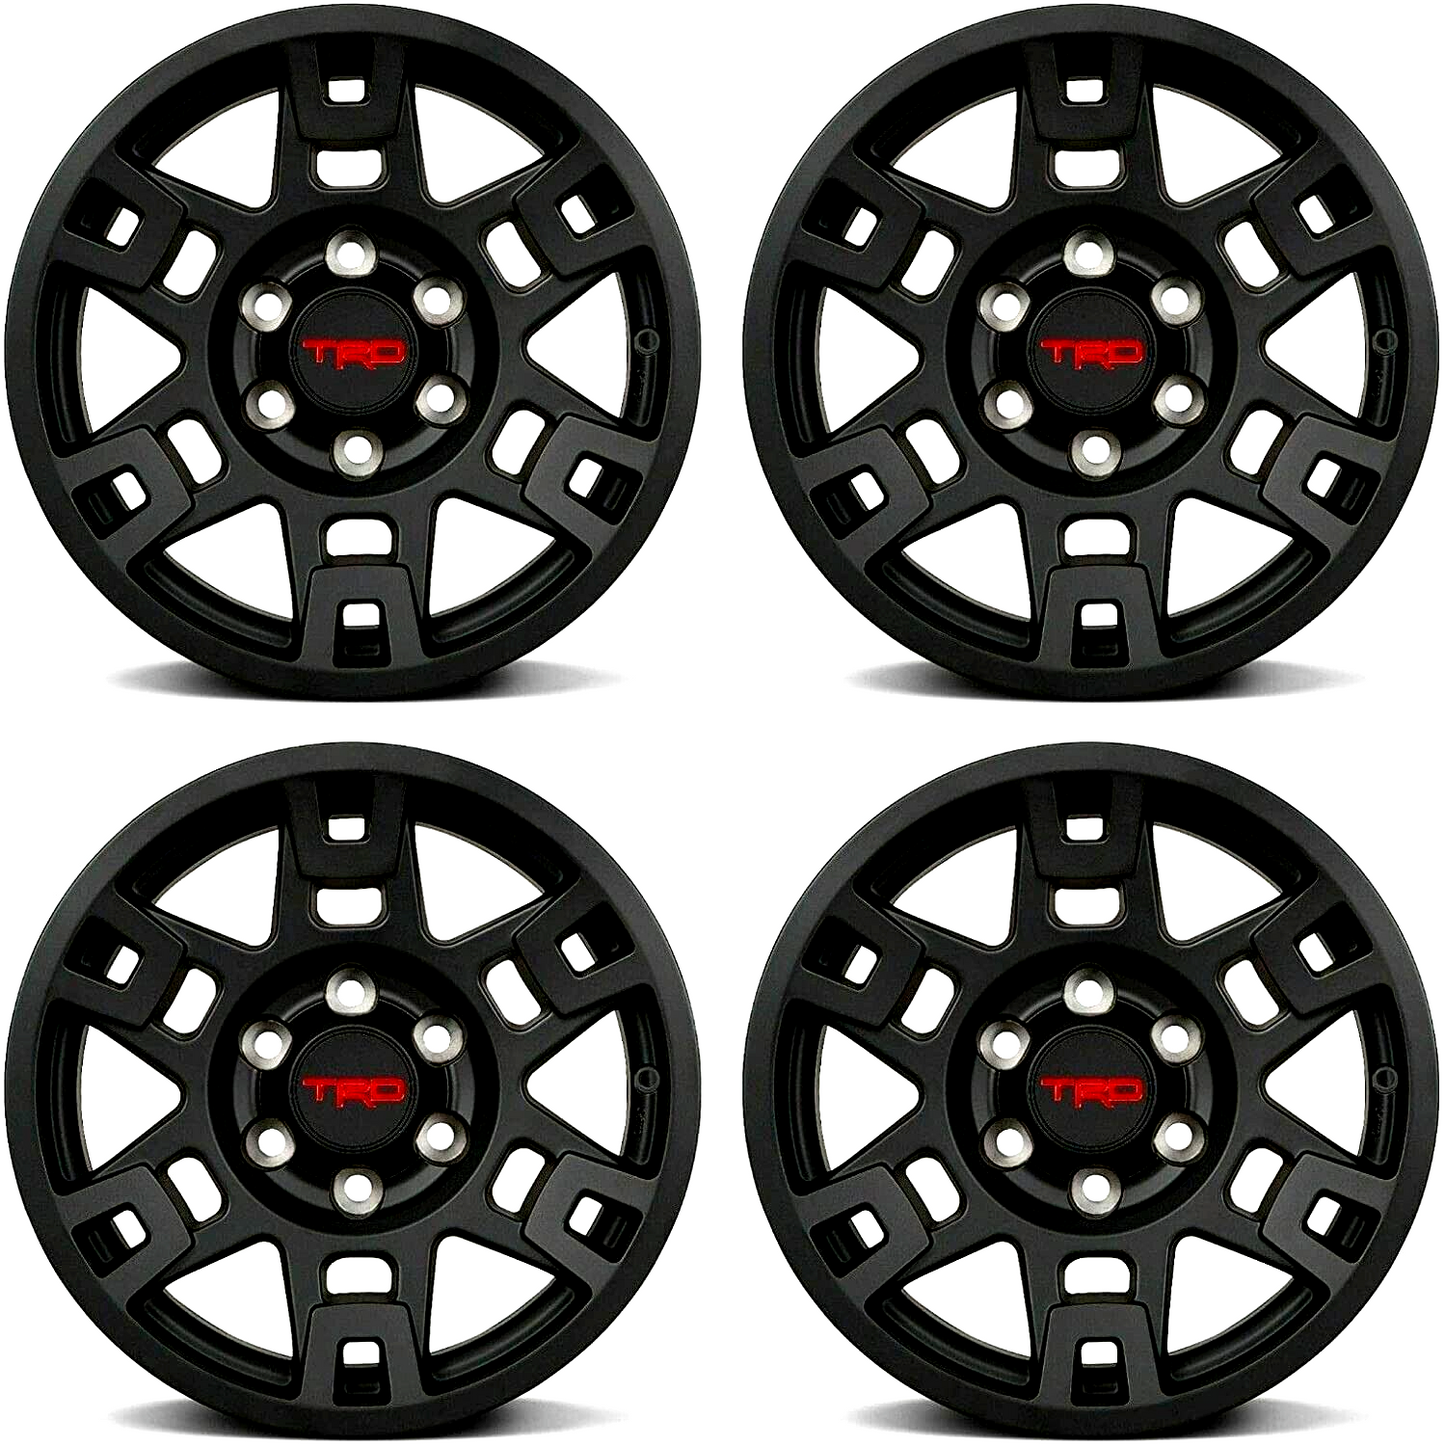 Toyota TRD Wheels 17 x 7.5 Auto Rims PCD 6 x 139.7 ET 30 CB 106.1 Set of 4 Matte Black